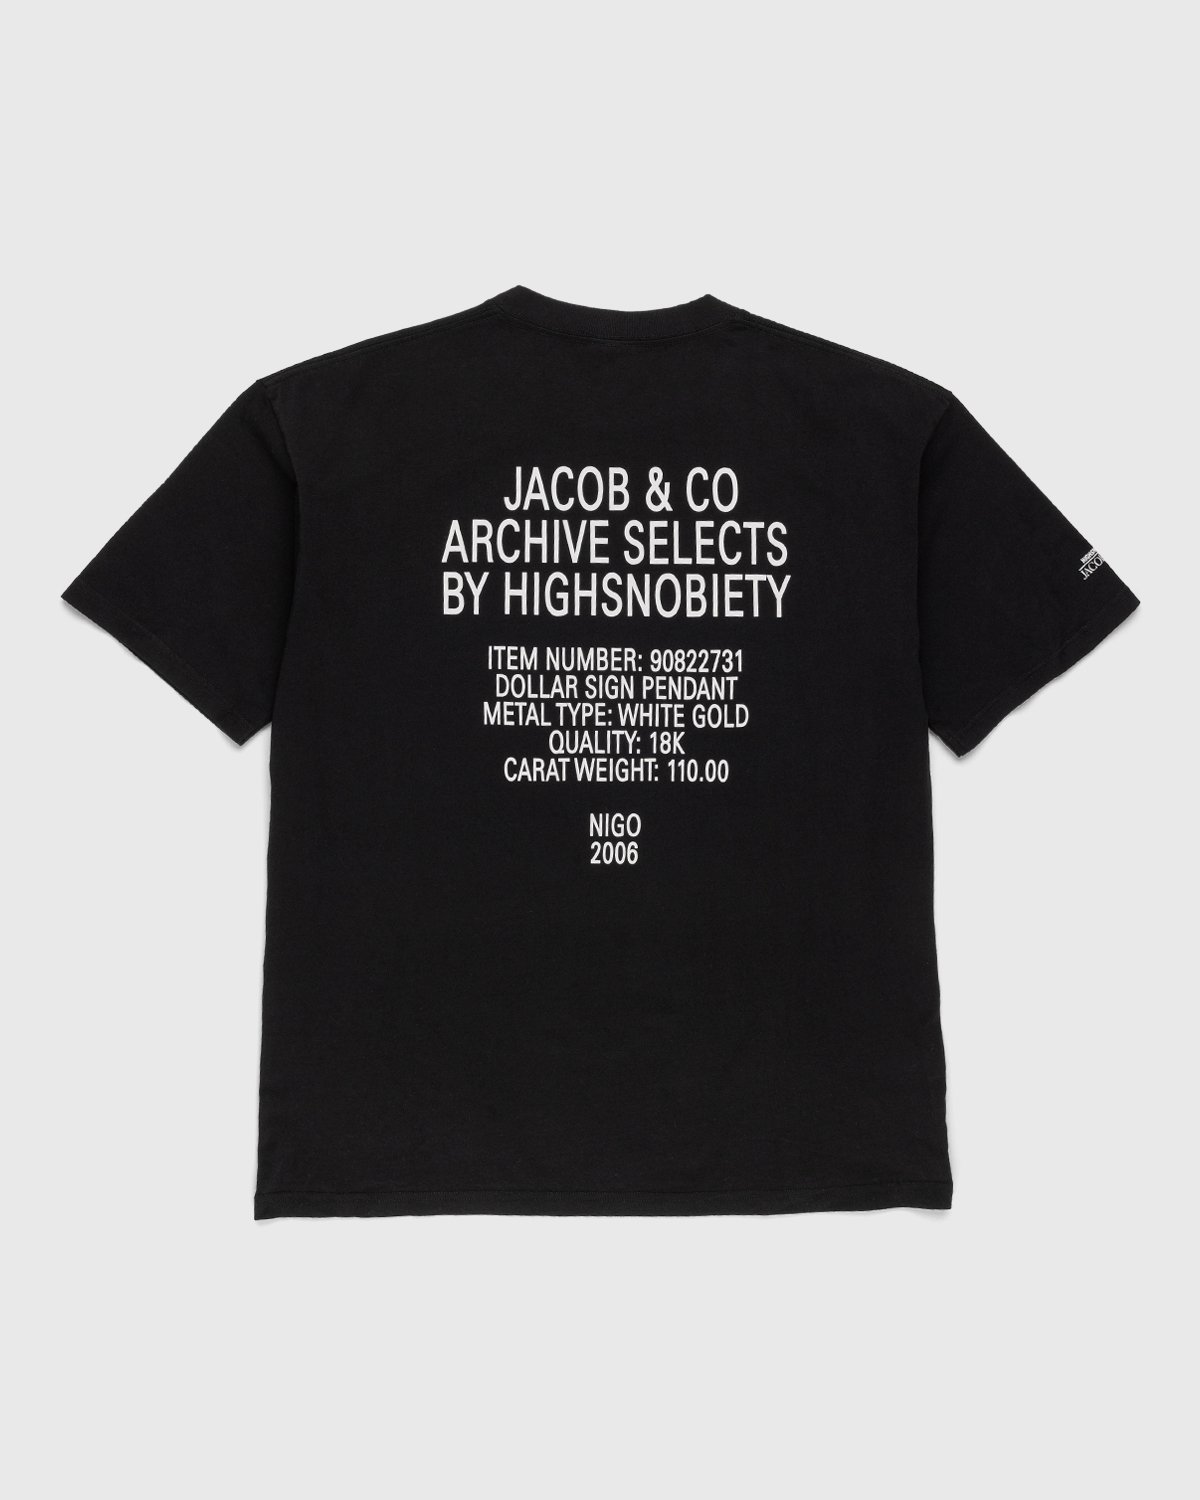 Jacob & Co. x Highsnobiety - Dollar Sign Pendant T-Shirt Black - Clothing - Black - Image 2